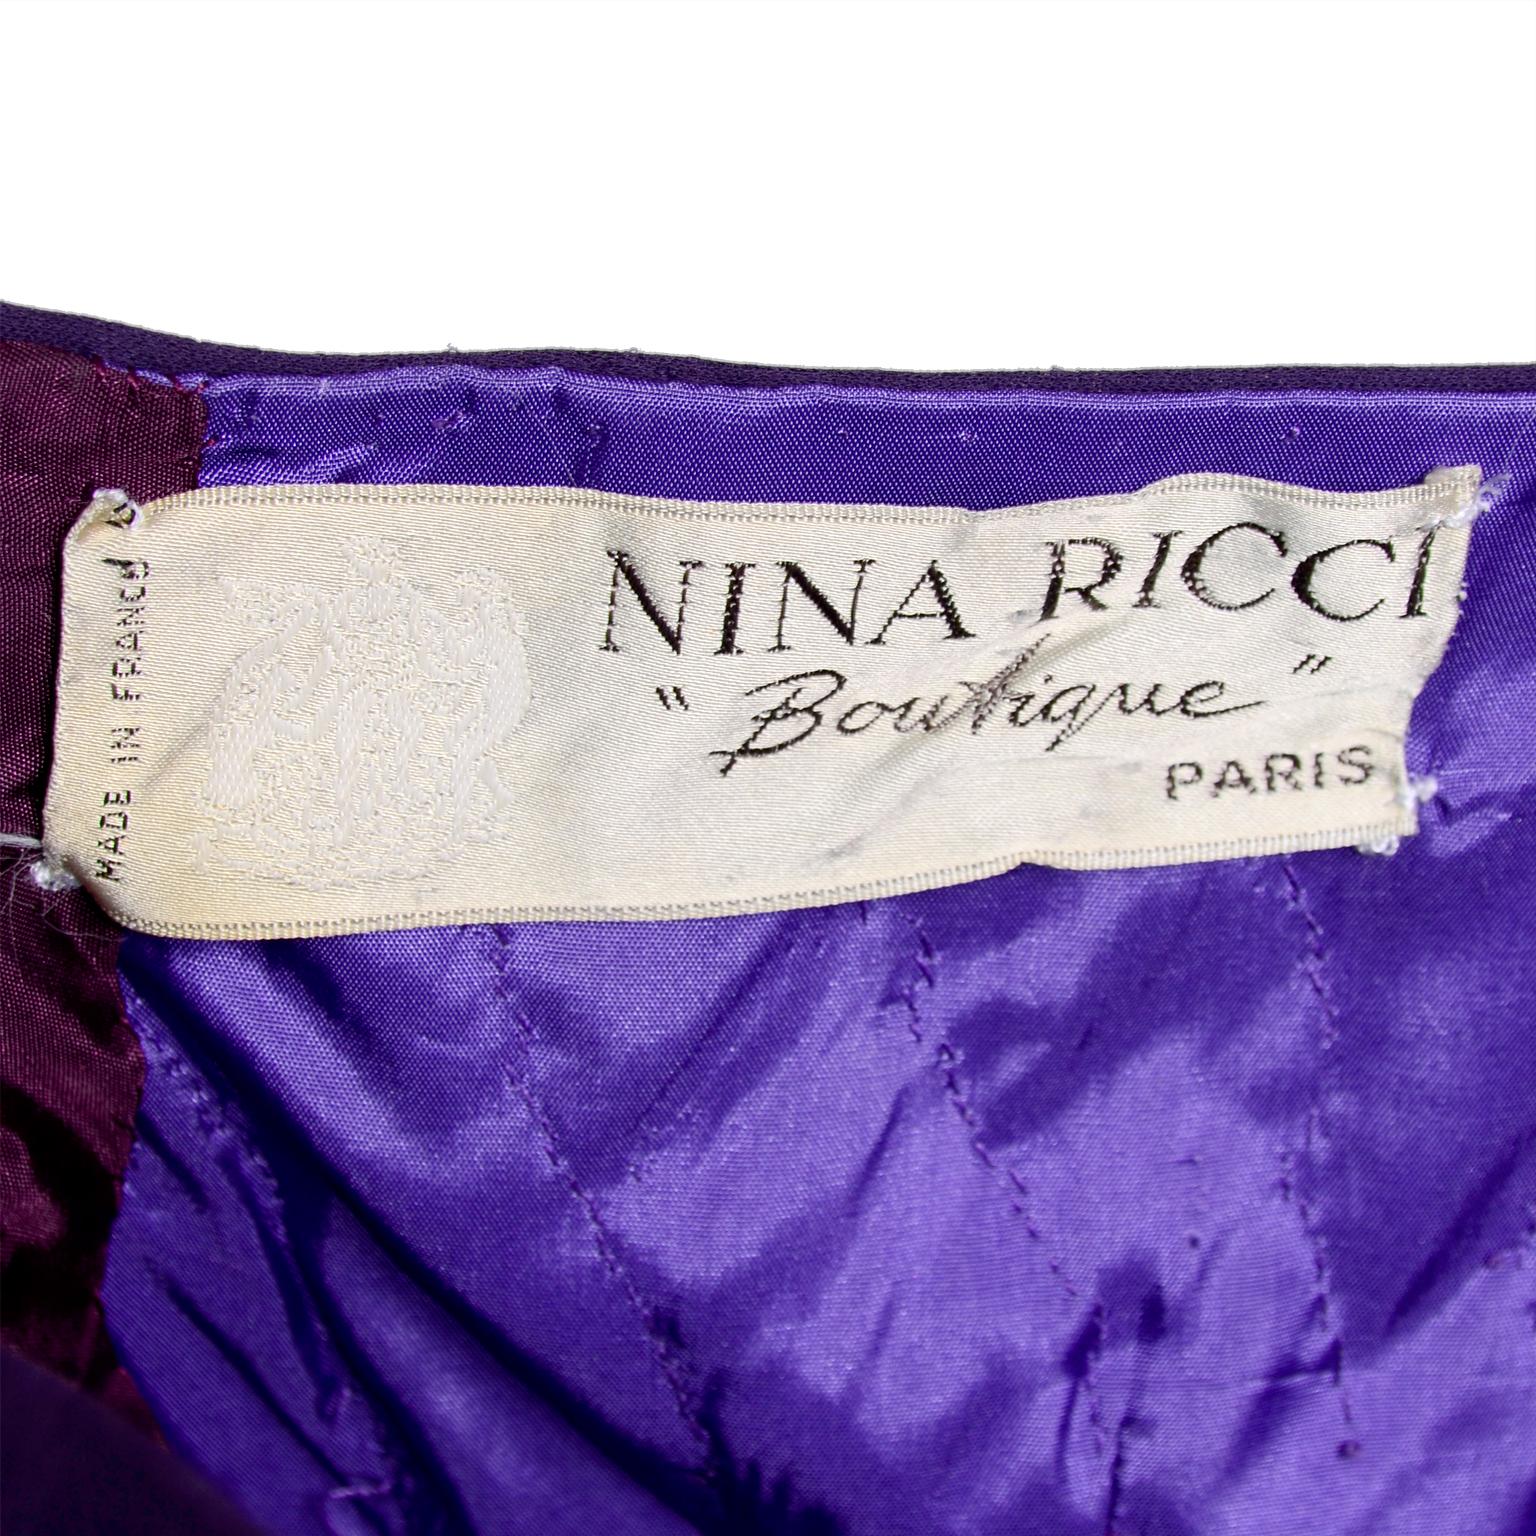 Women's Nina Ricci Strapless Dress Green Taffeta and Purple Silk Evening Gown w Pink Bow